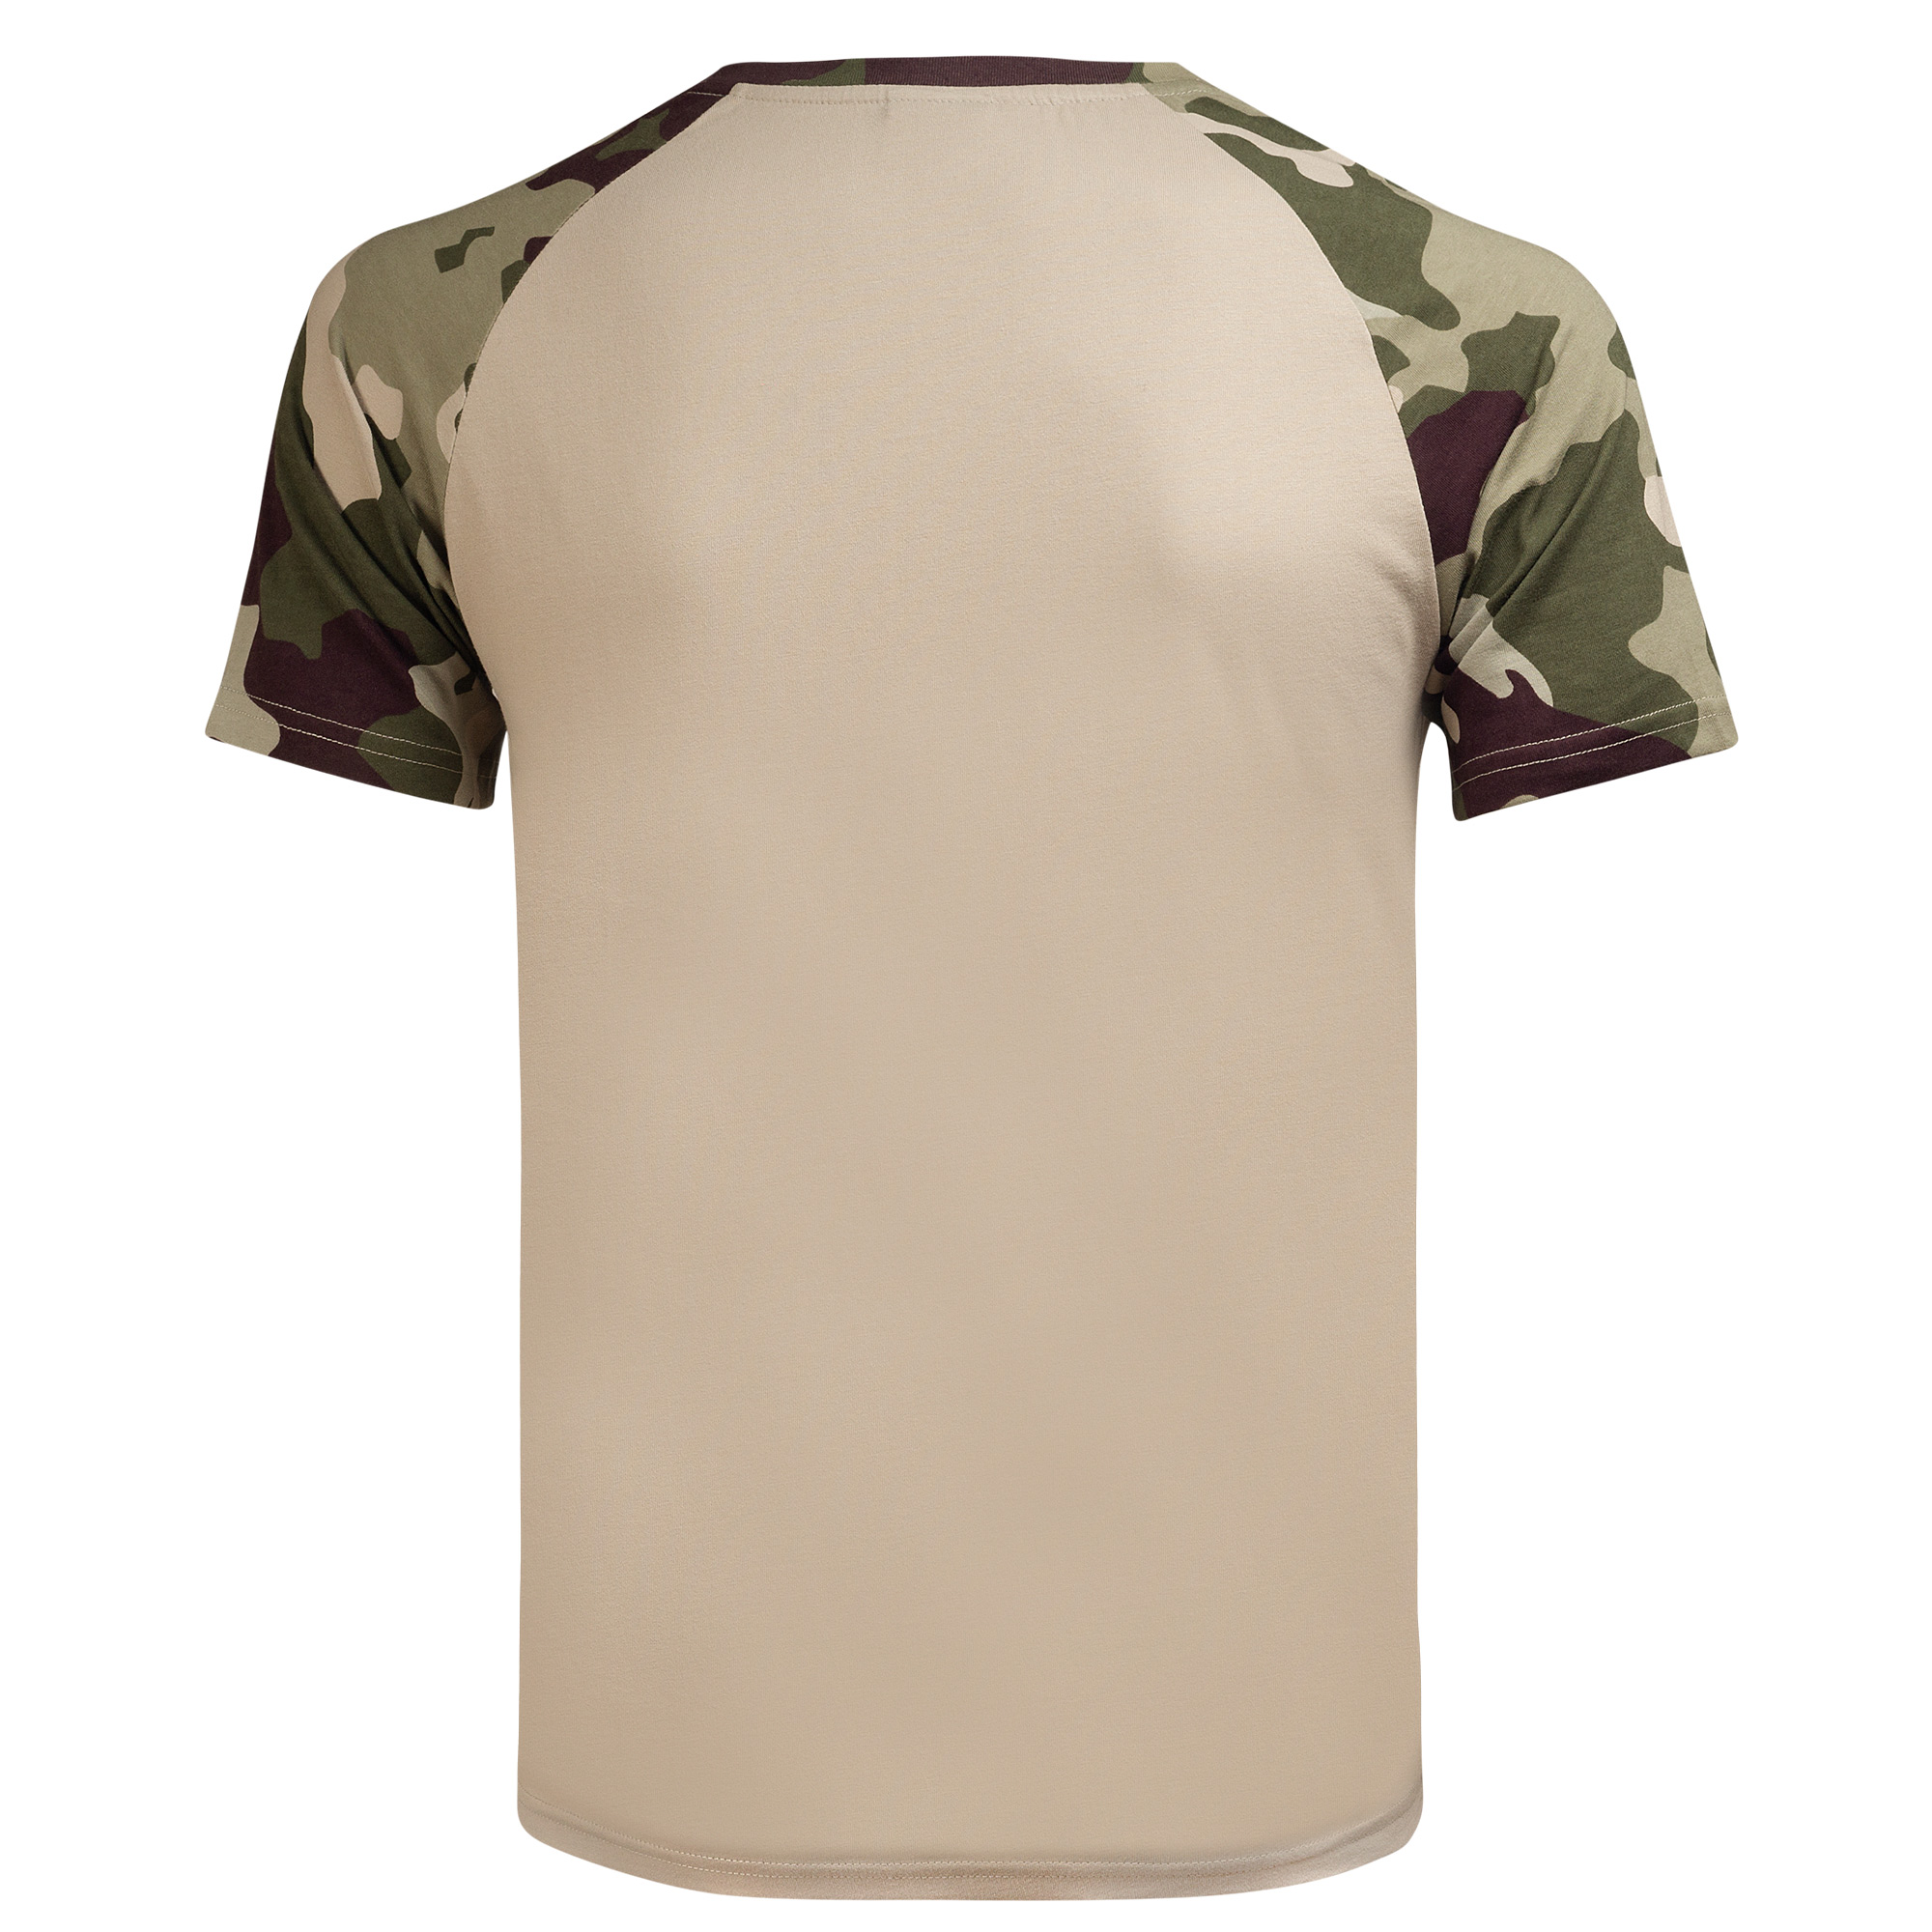 MIG_CTSA002 футболка мужская цвет S190,100%х/б